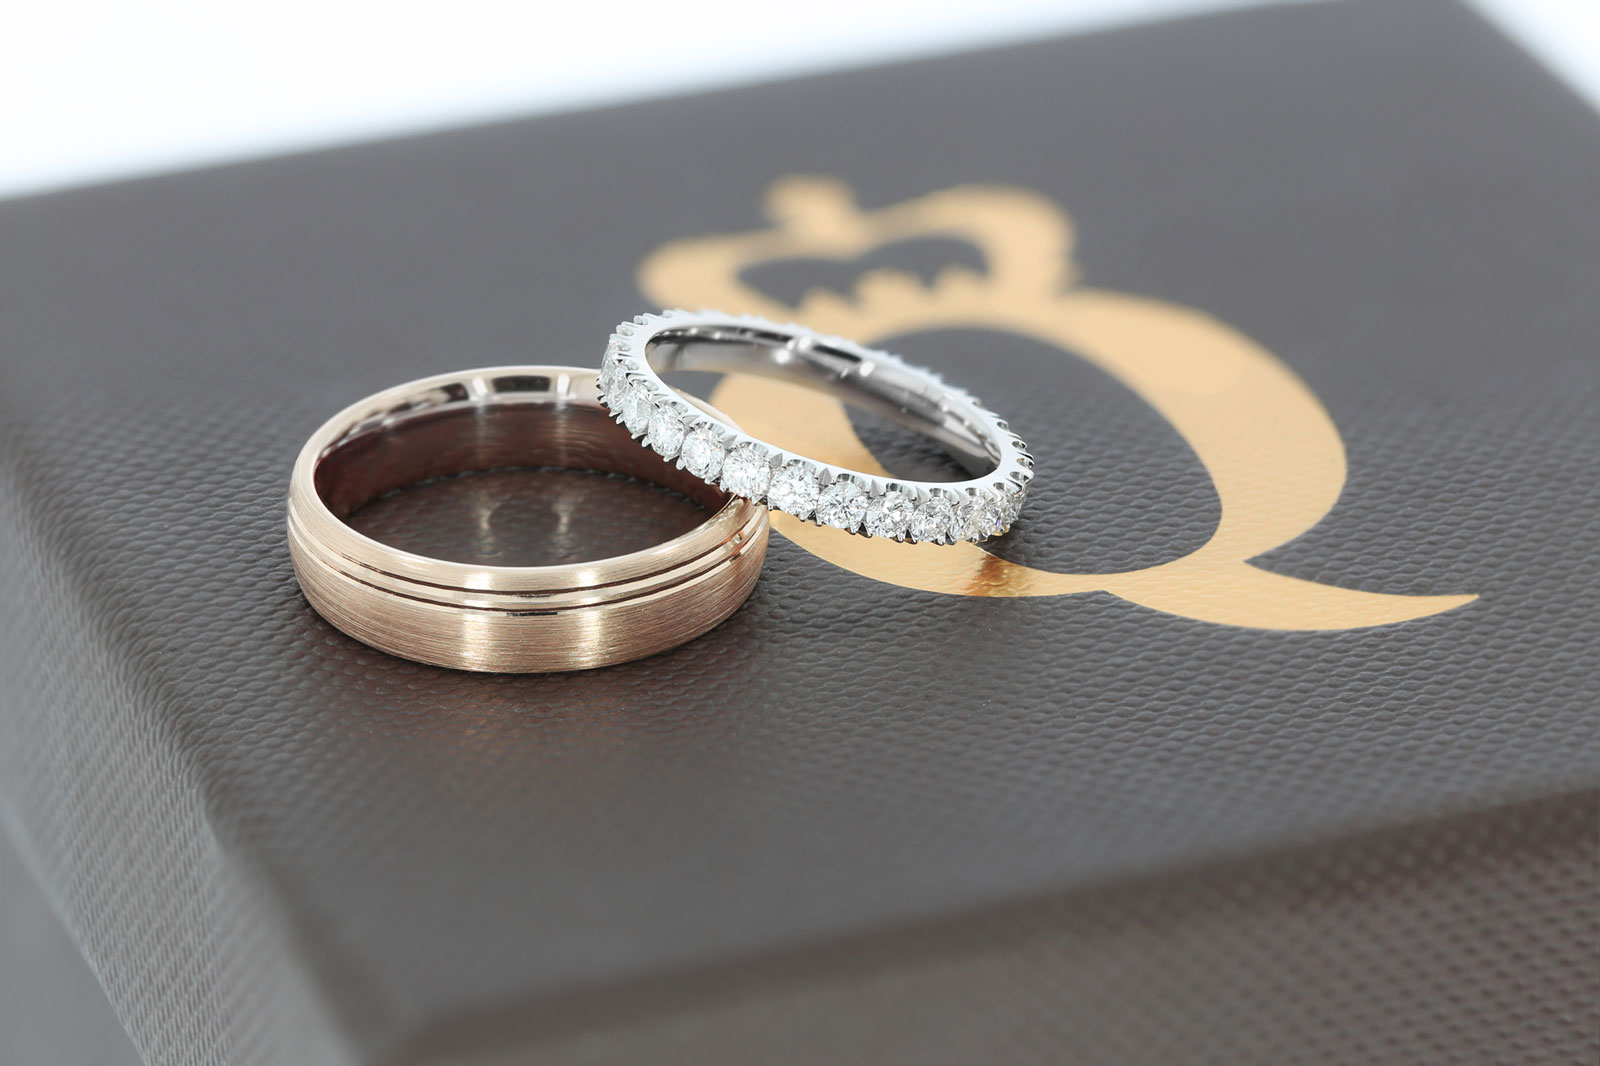 wedding planning details, wedding ring, wedding rings, rings, diamond ring, hatton gardens, wedding band, wedding bands